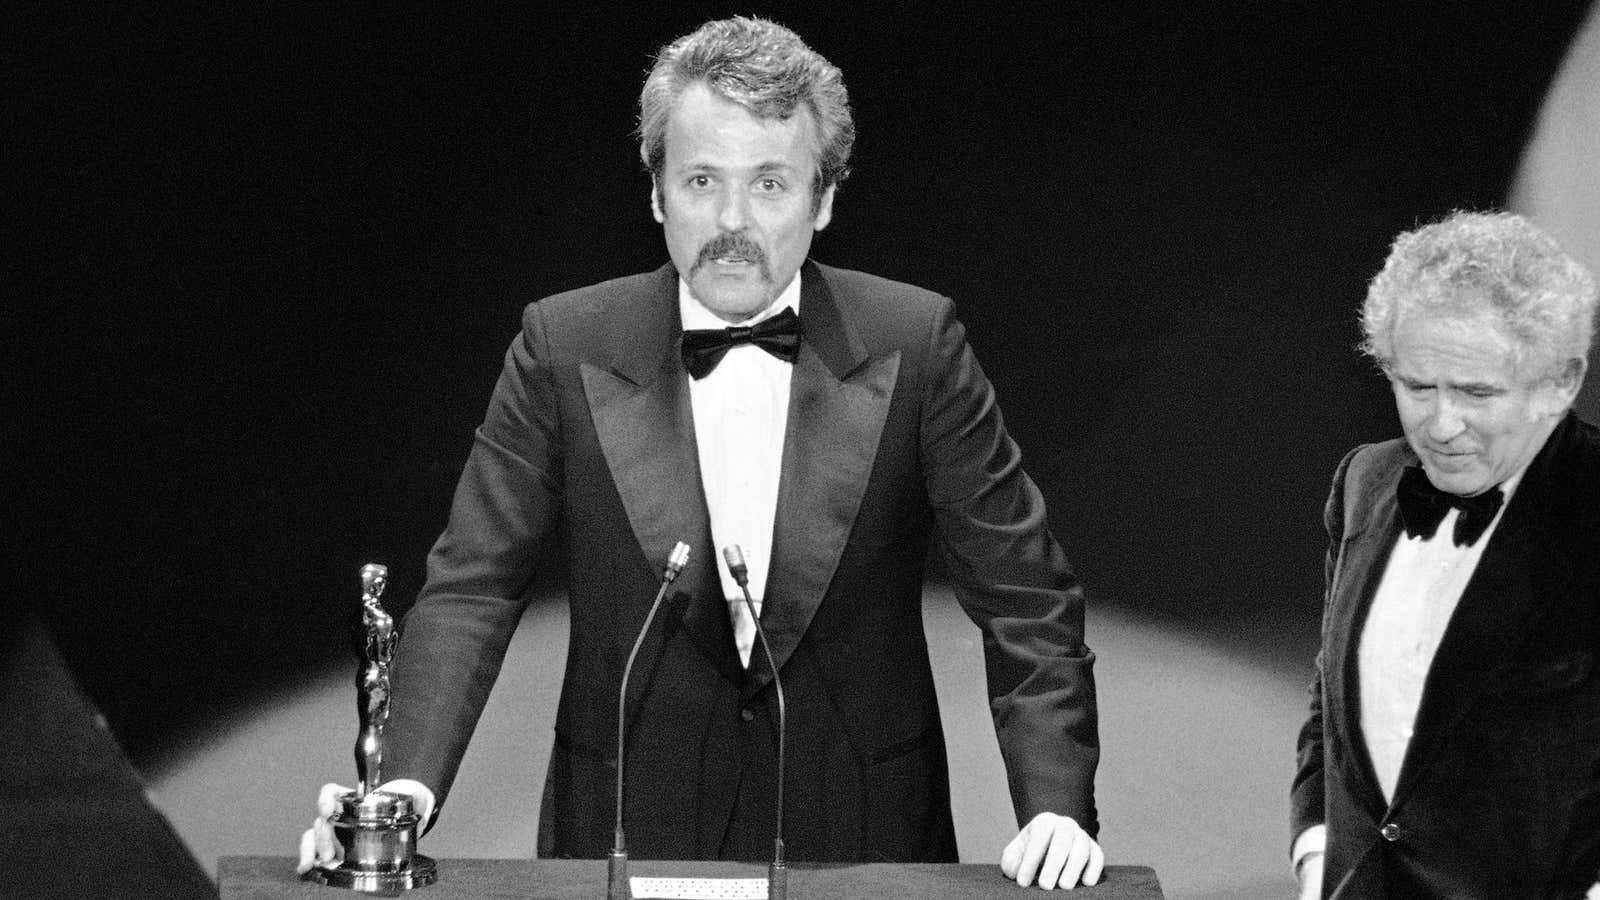 William Goldman wins an Oscar for “All the President’s Men” in 1977.